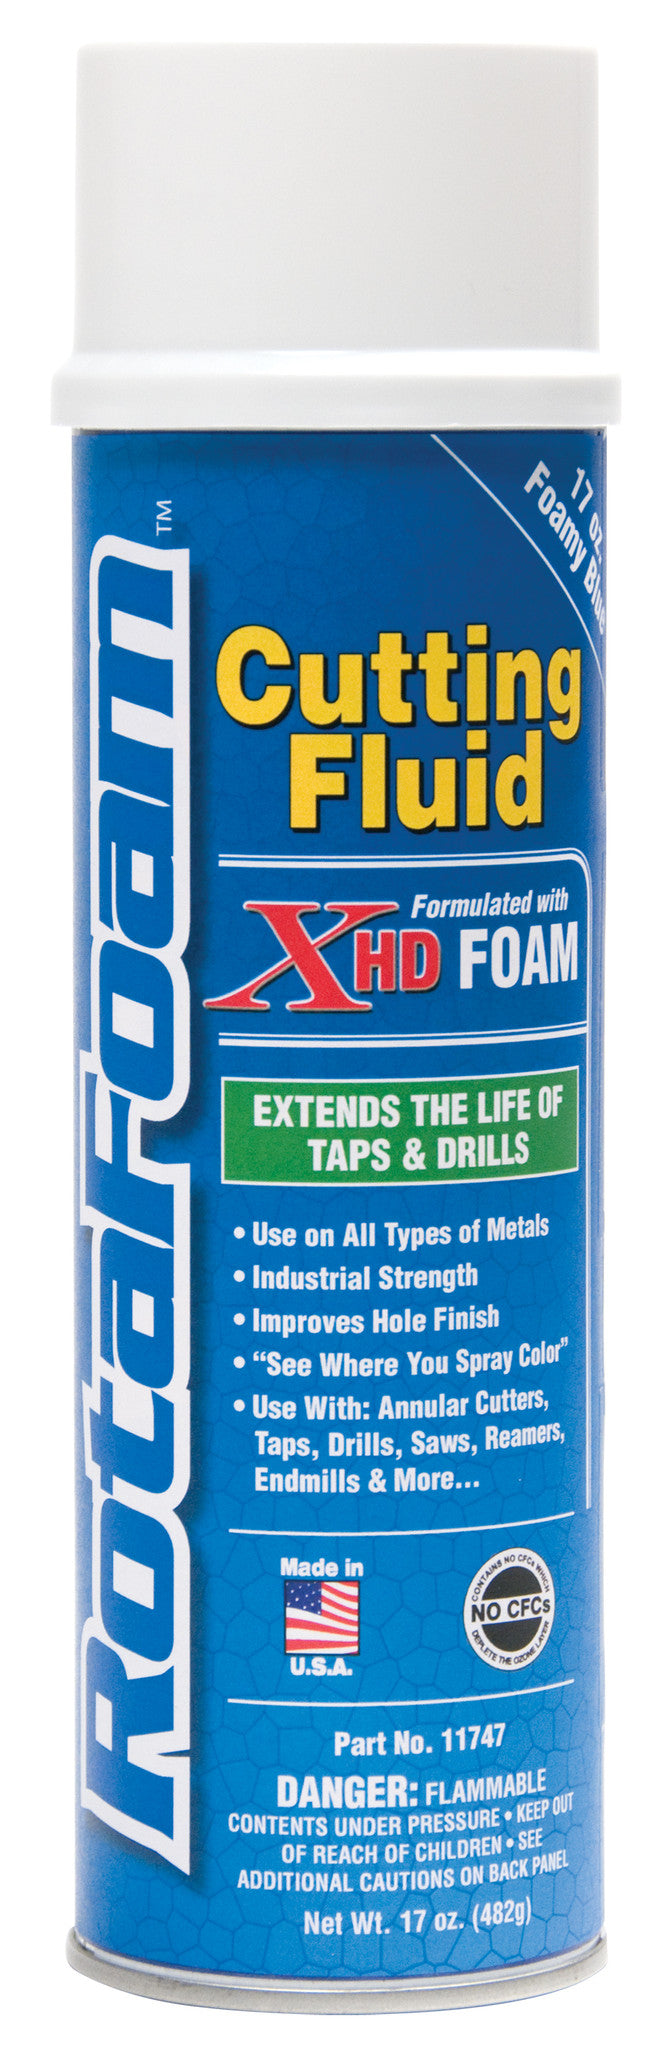 Cutting Fluid Overview [PDF] – Design